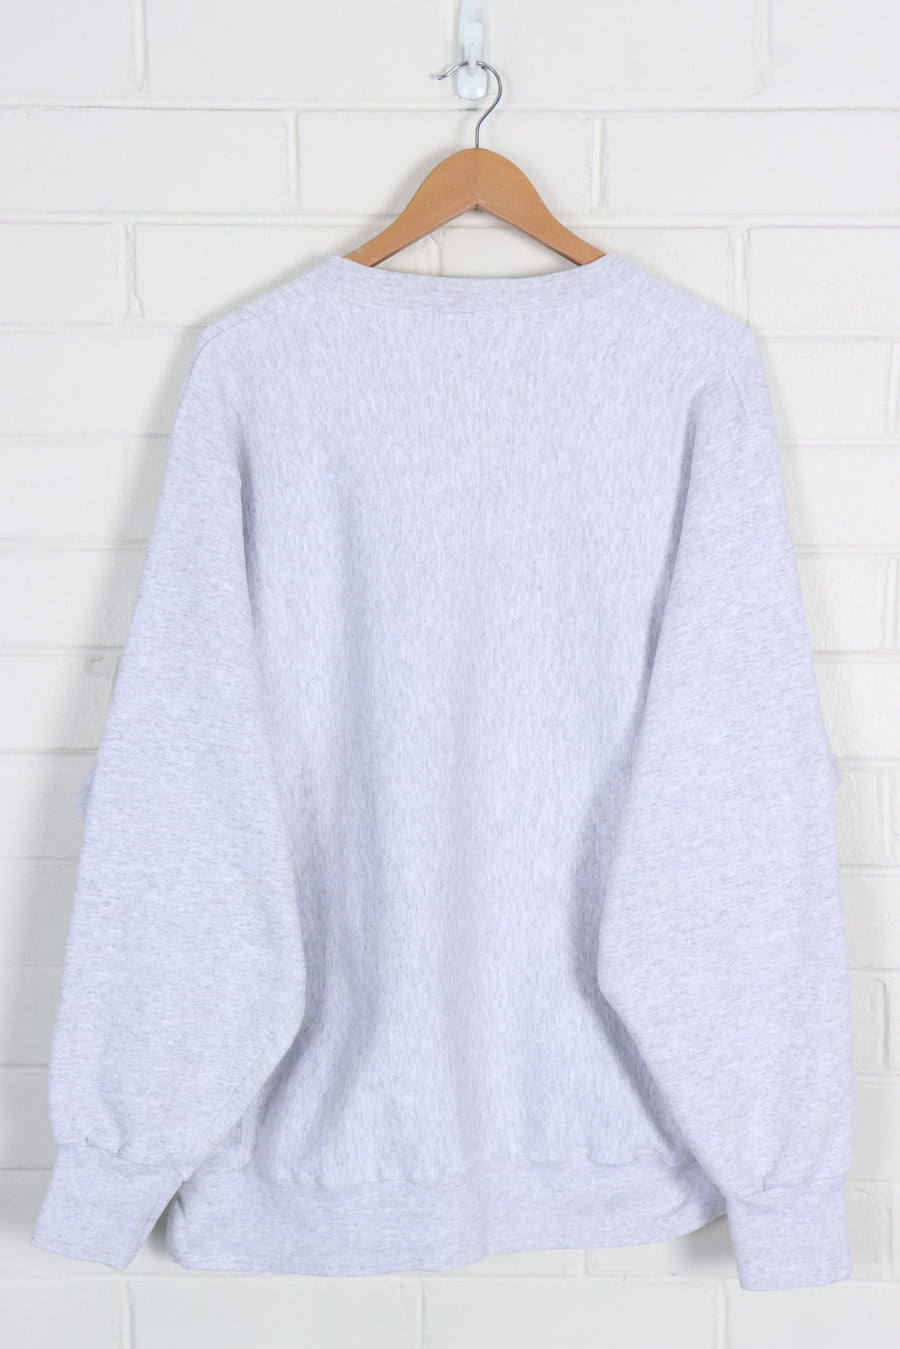 Capital University Ohio Grey Marle Reverse Weave Sweatshirt USA Made (XL)